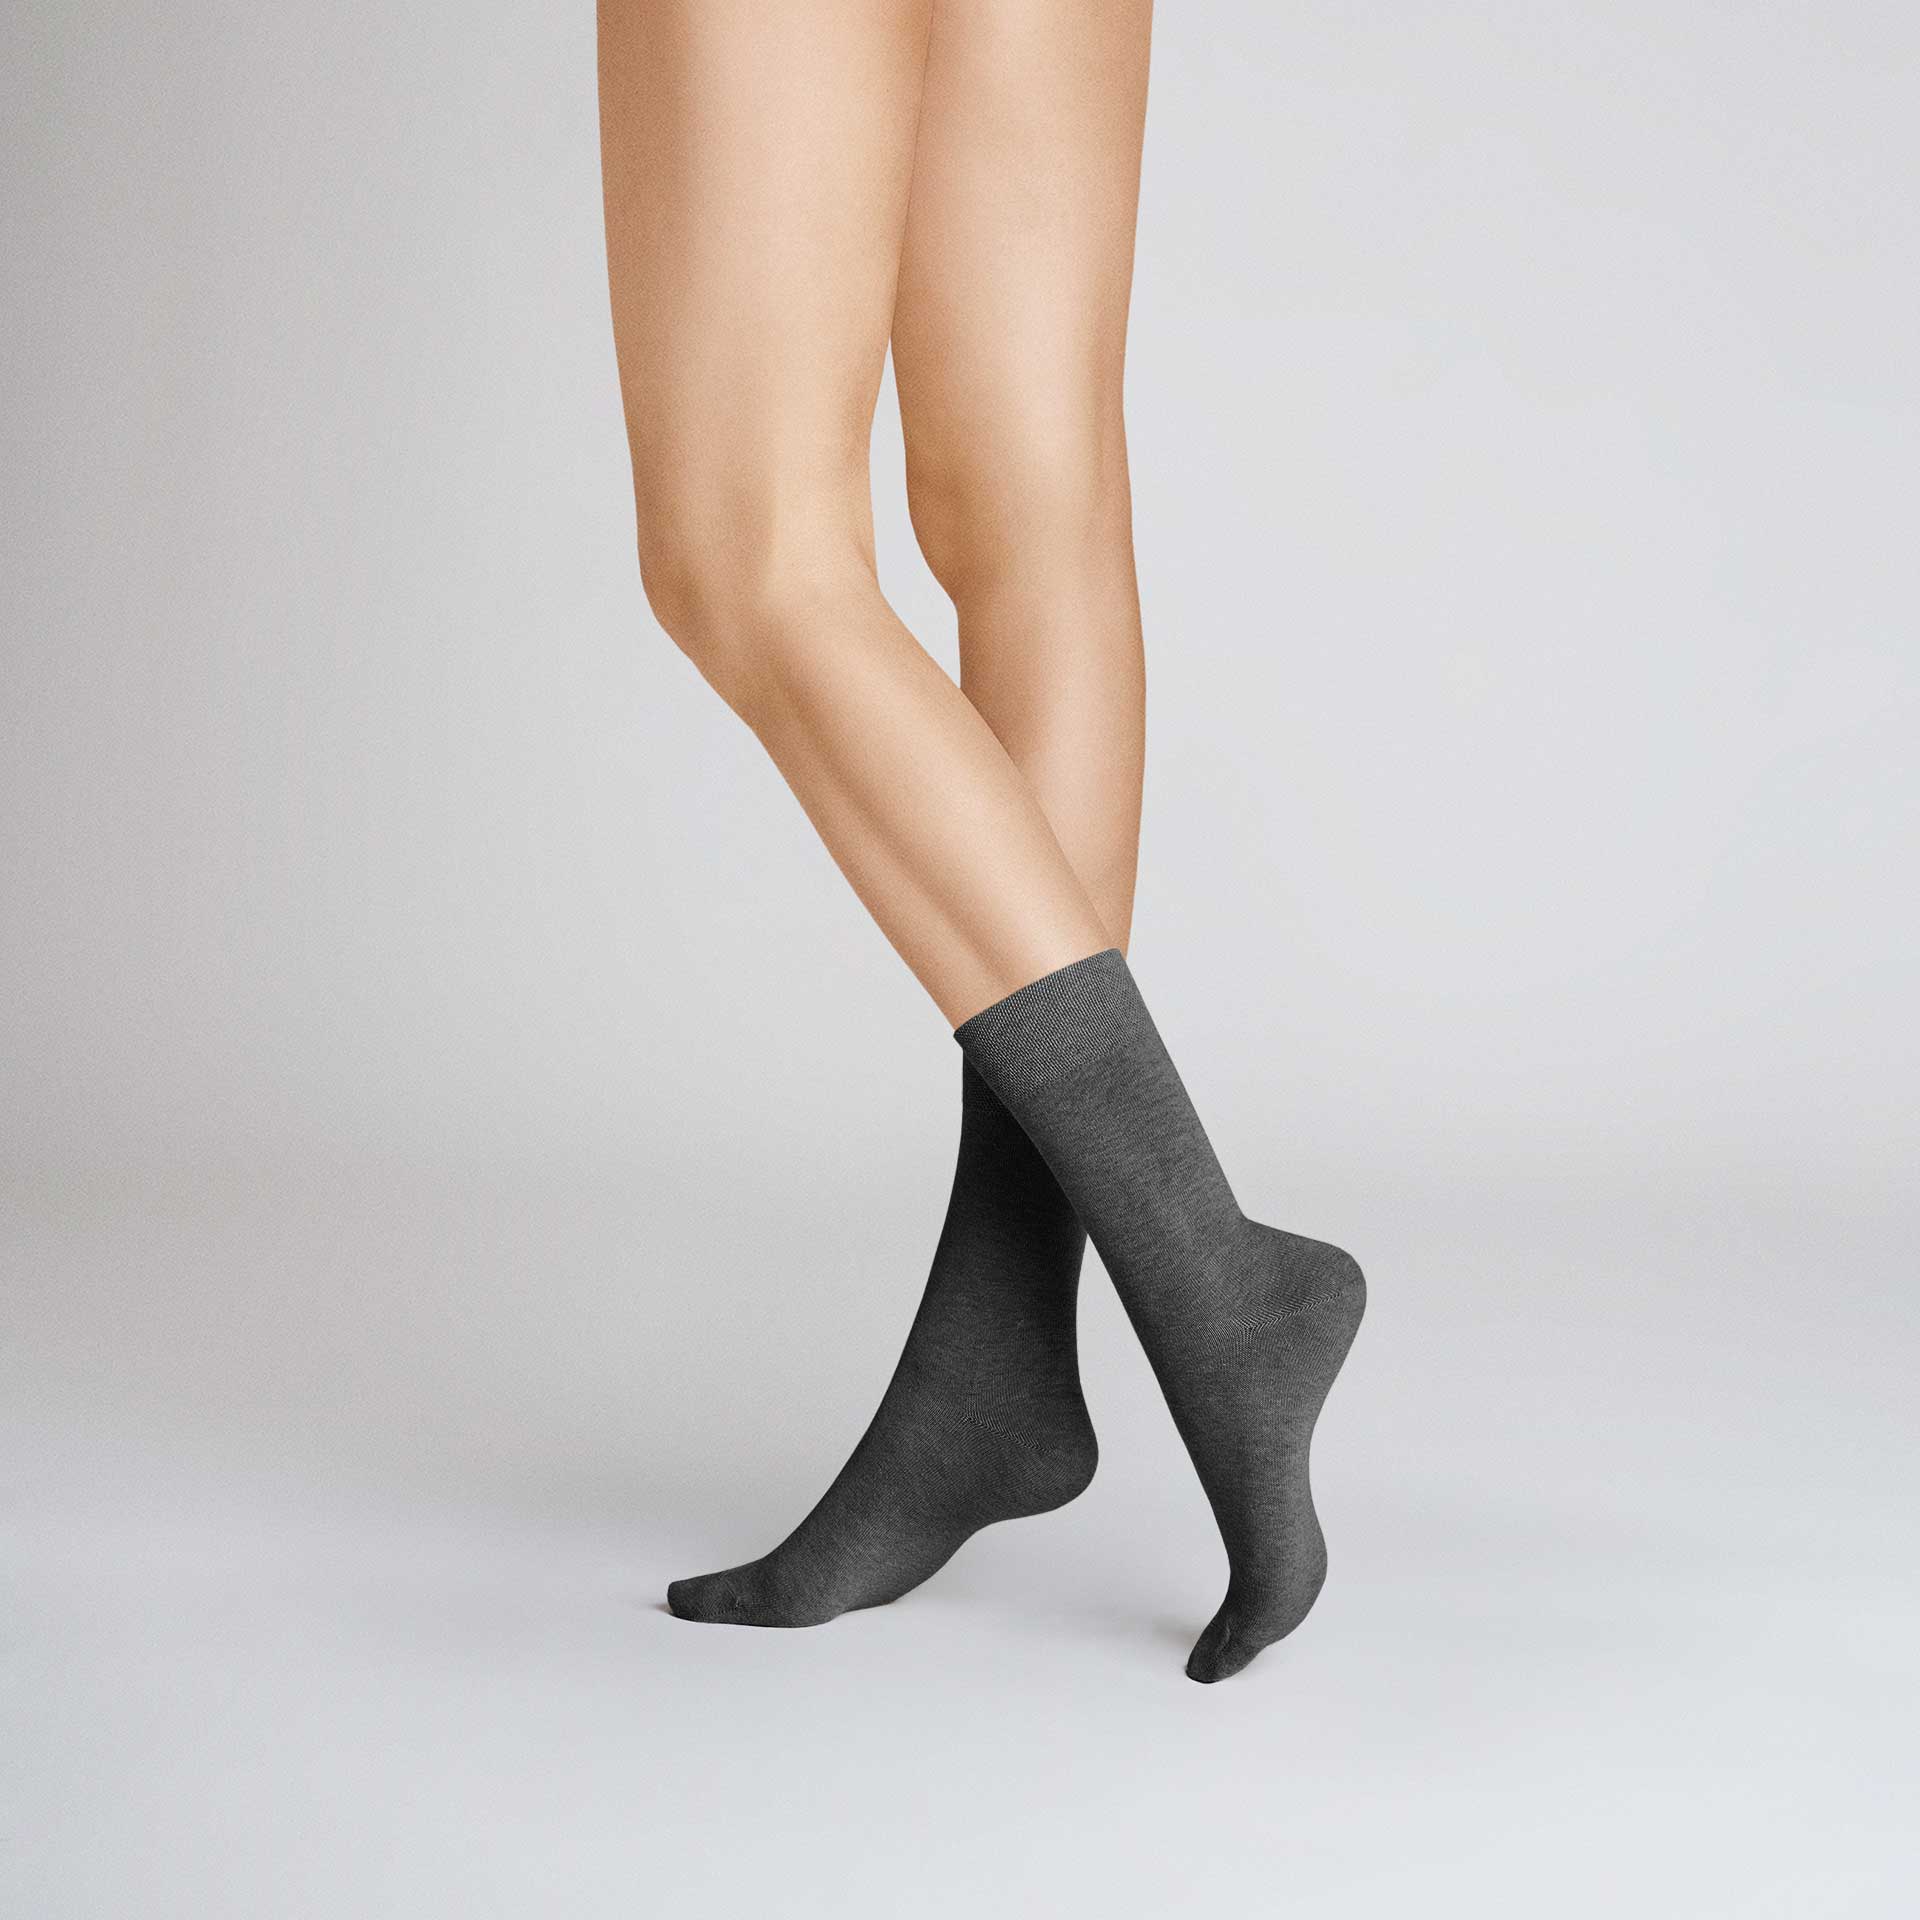 HUDSON Damen RELAX COTTON     -  39/42 - Socken aus 97% Baumwolle - Grau-mel. (Grau)